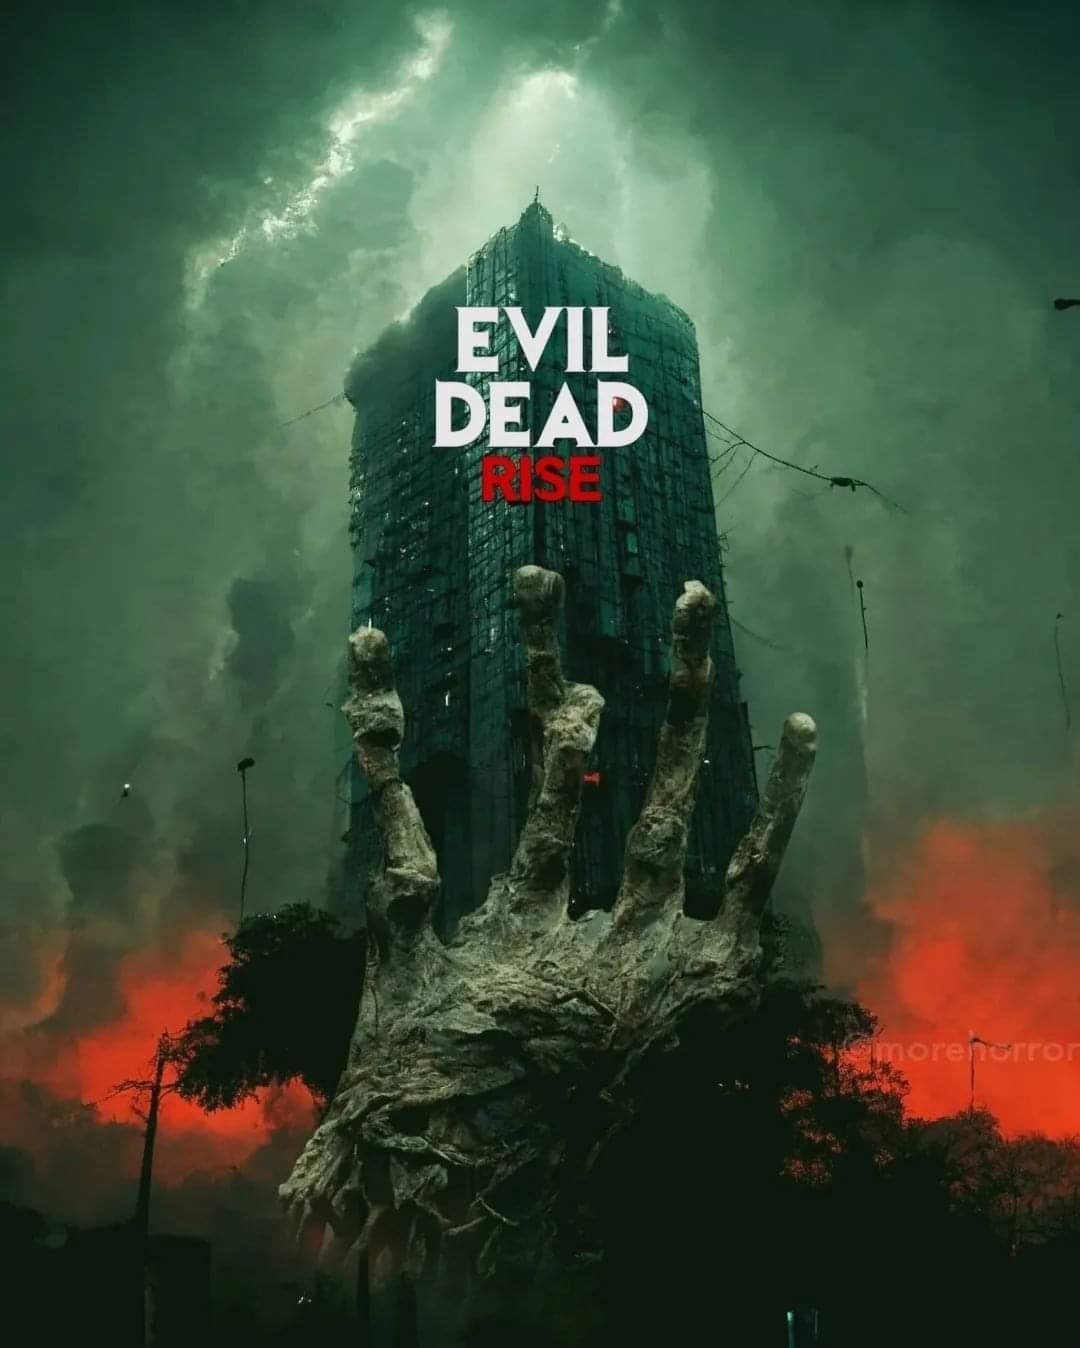 Evil Dead Rise Movie (2023) Review, Wiki, Cast & More - Badisoch